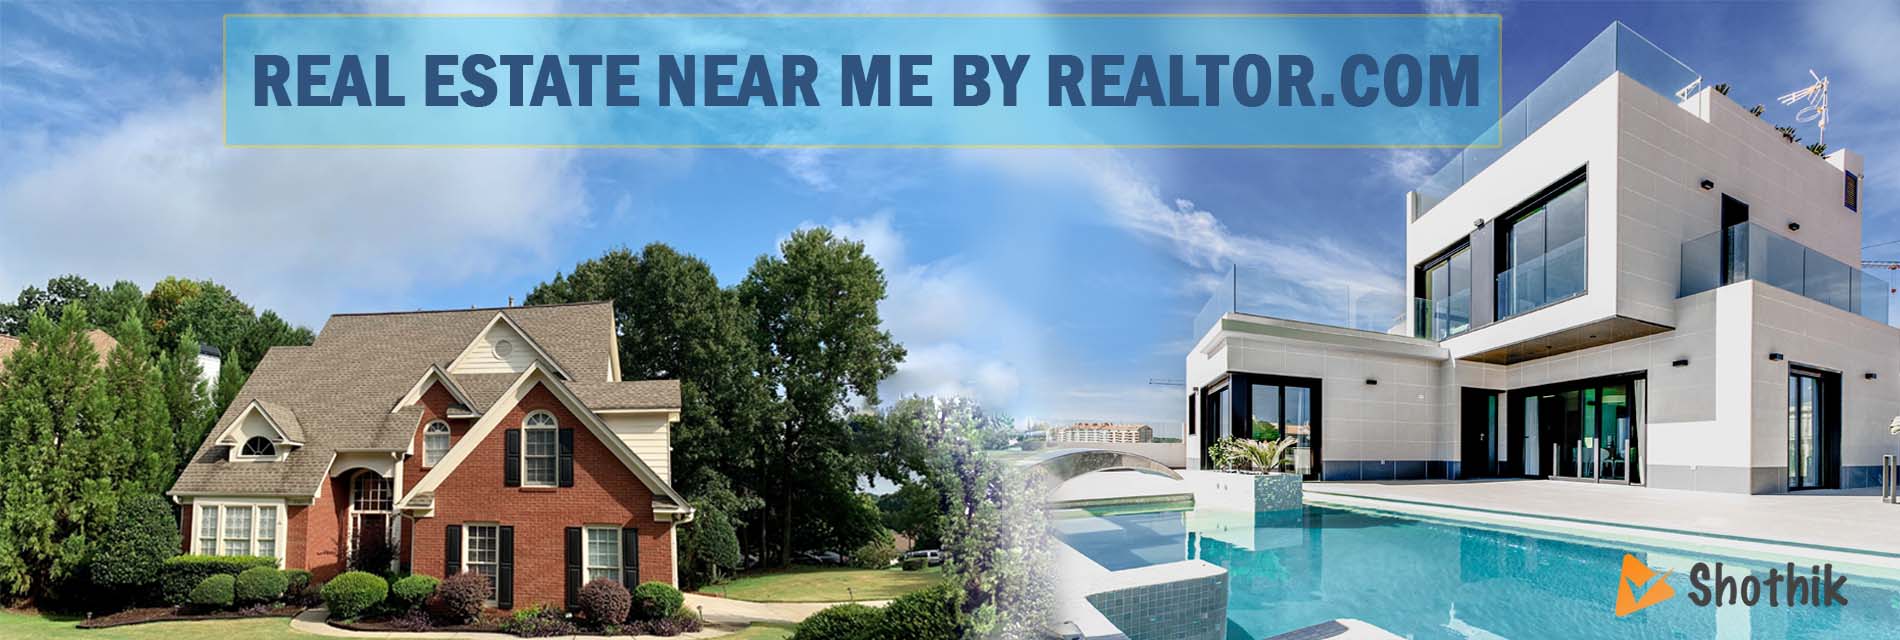 real estate near me by realtor.com